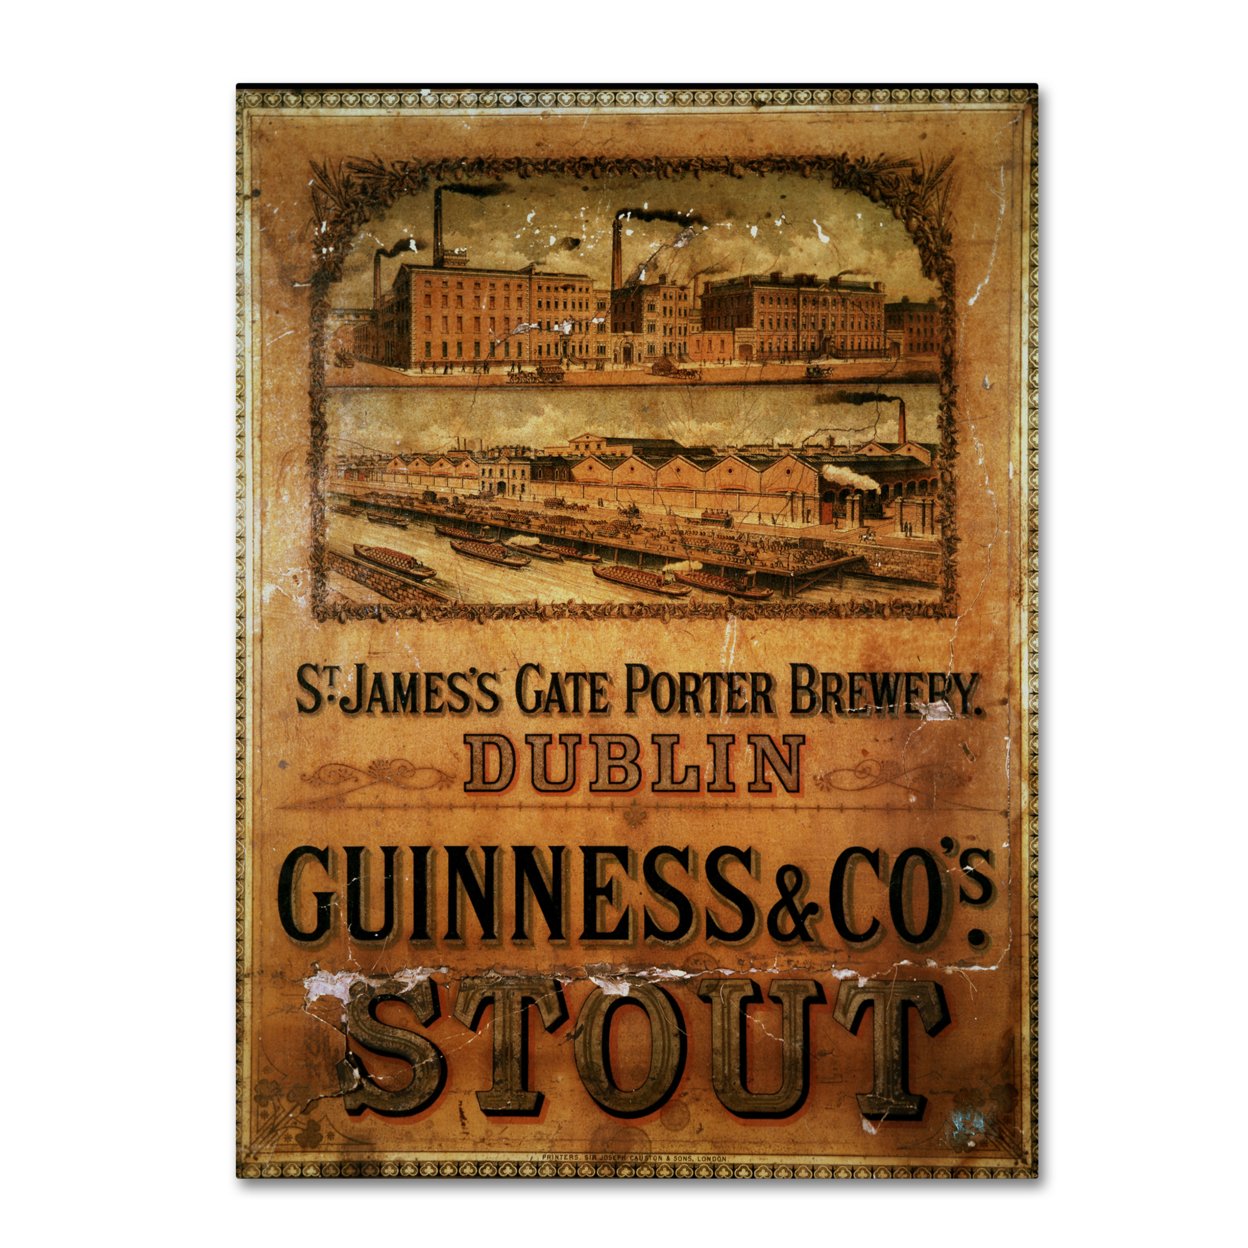 Guinness Brewery 'St. James' Gate Porter Brewery' Canvas Art 18 X 24